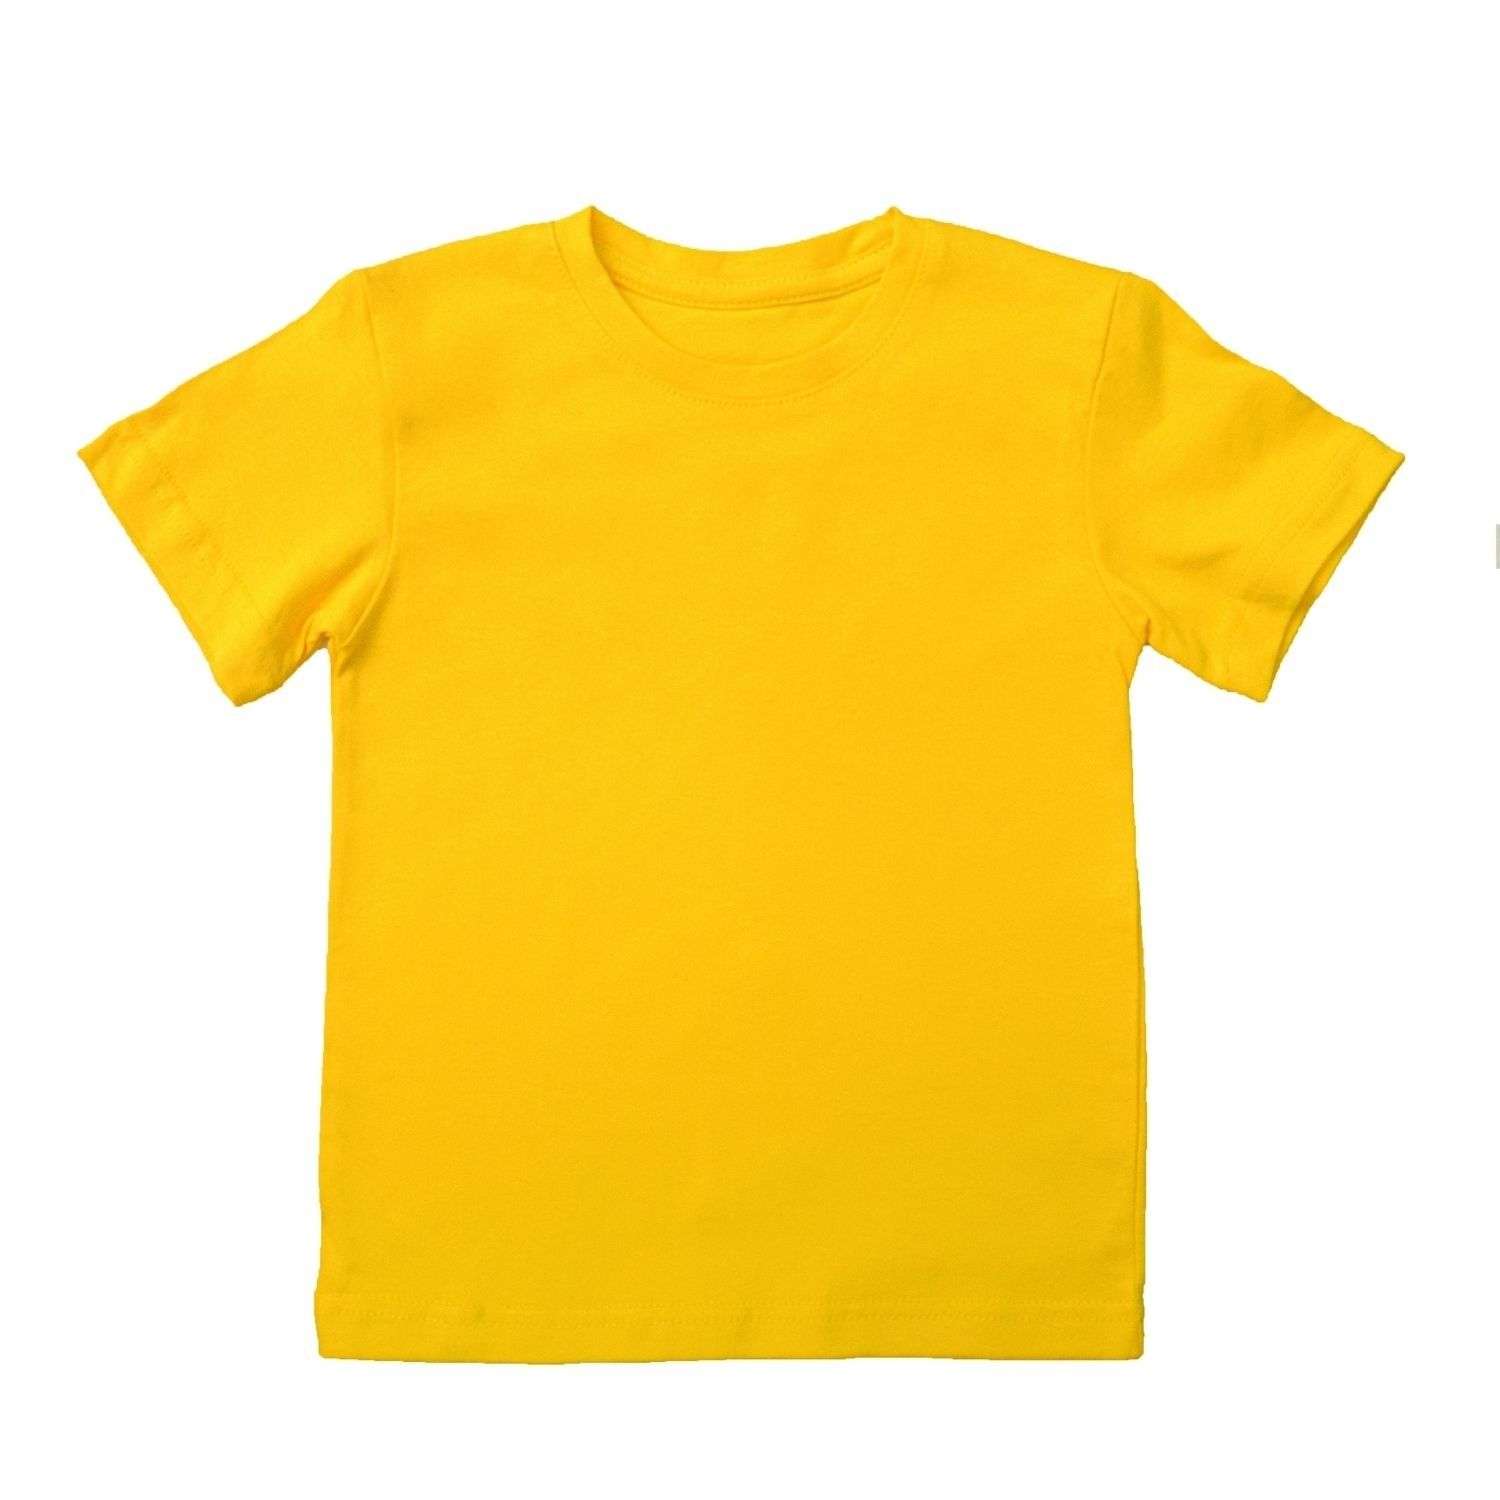 Футболка желтая. Желтая футболка детская. Футболка детская желтая однотонная. Малыш в желтой футболке. Желтые х б